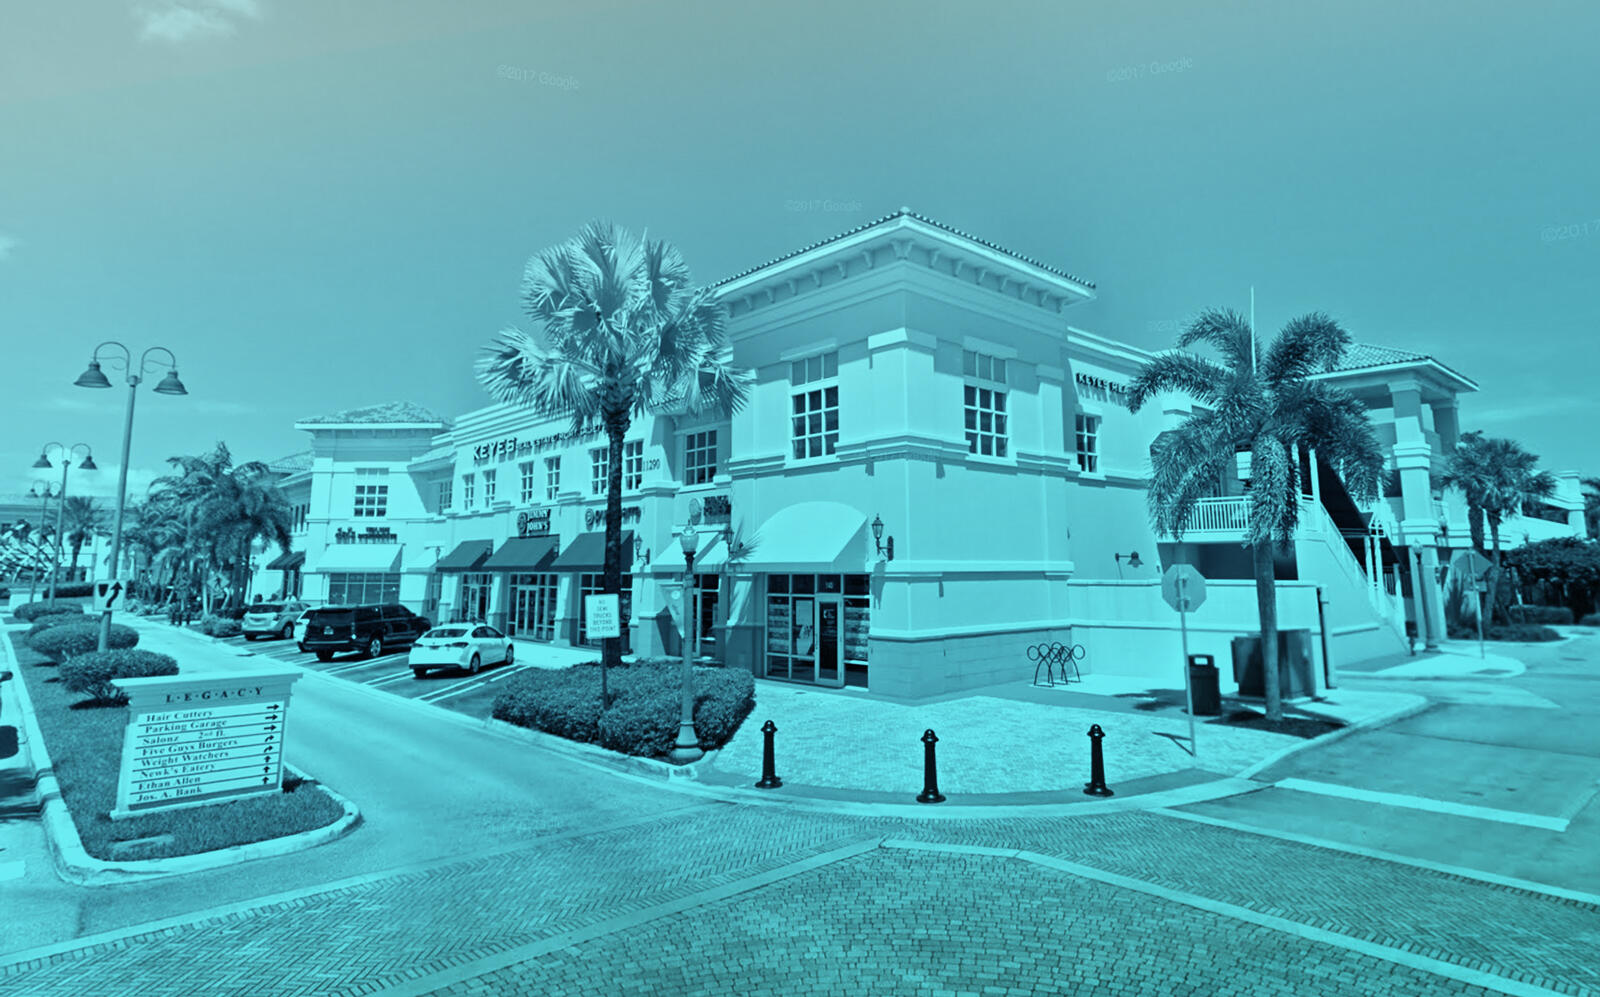 11290 Legacy Avenue in Palm Beach Gardens (Google Maps)